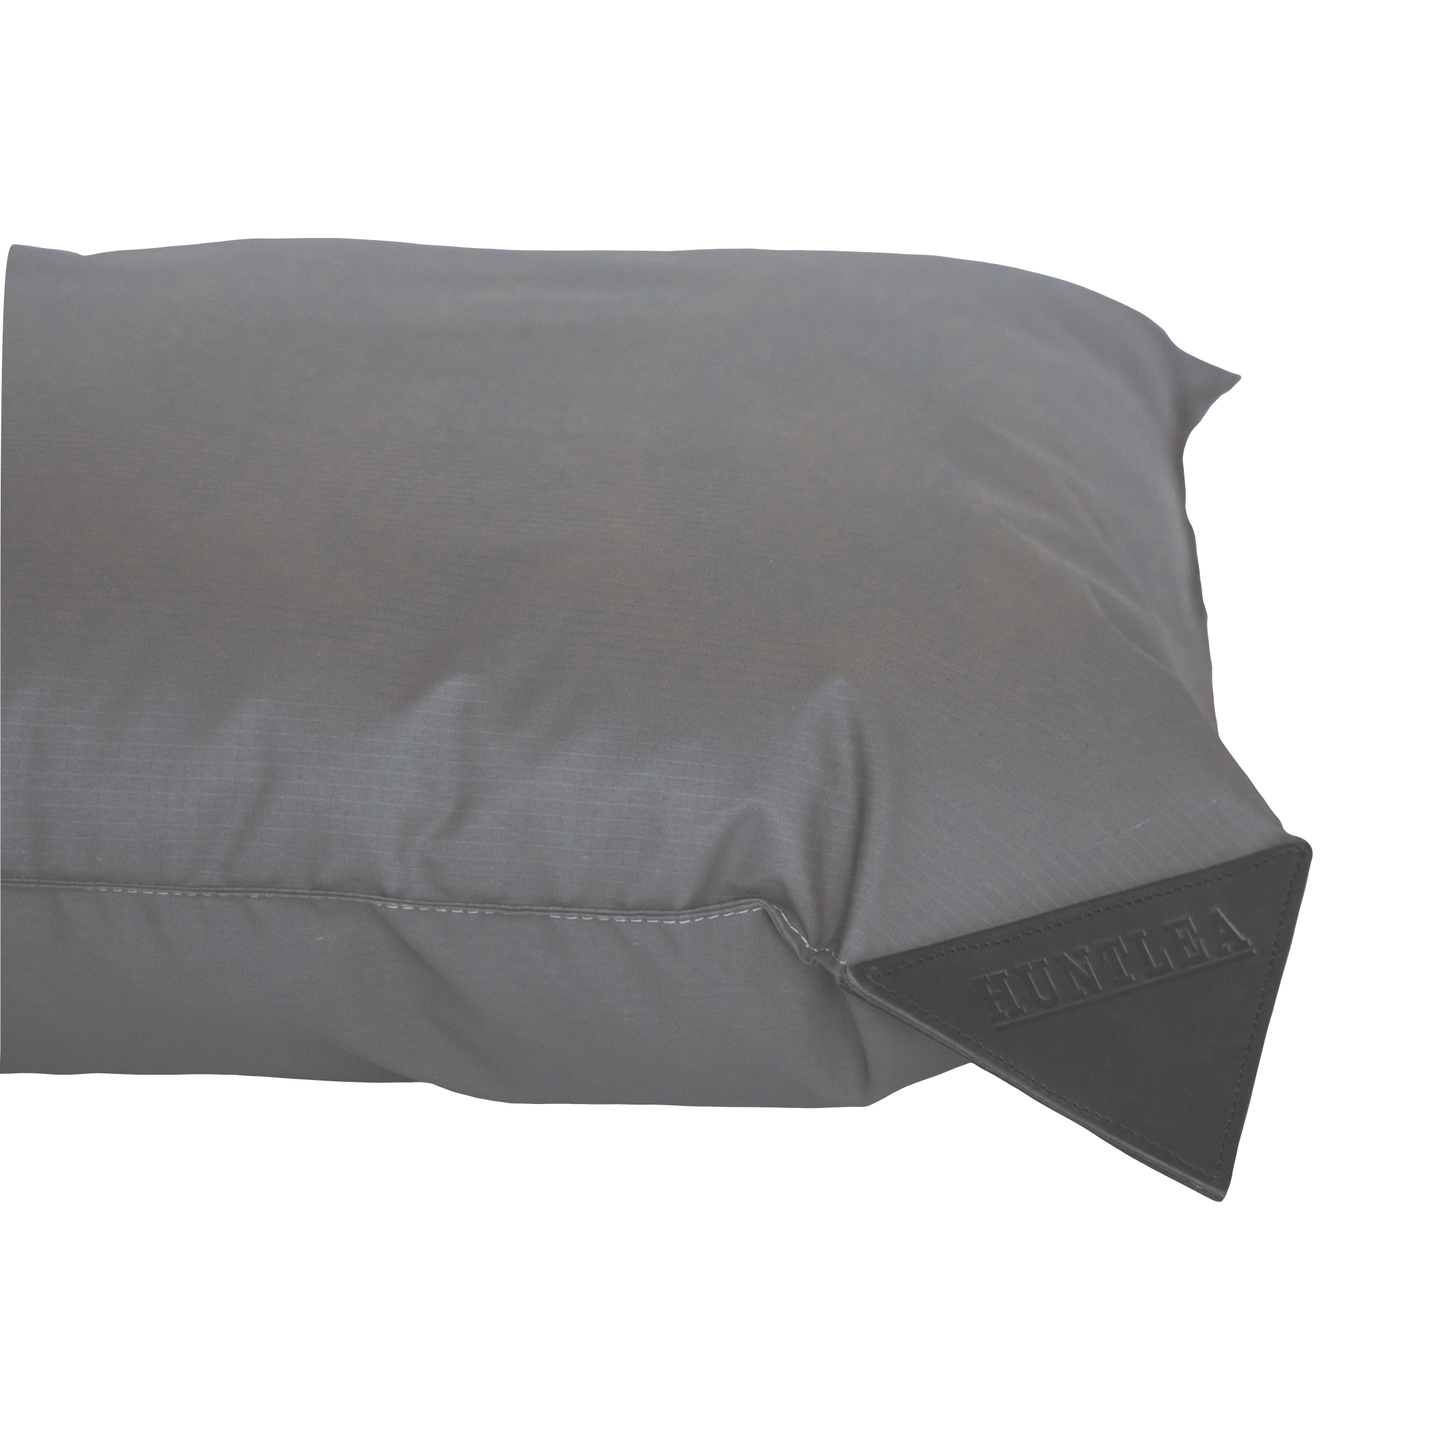 Huntlea Kalahari Pillow Dog Bed Cover